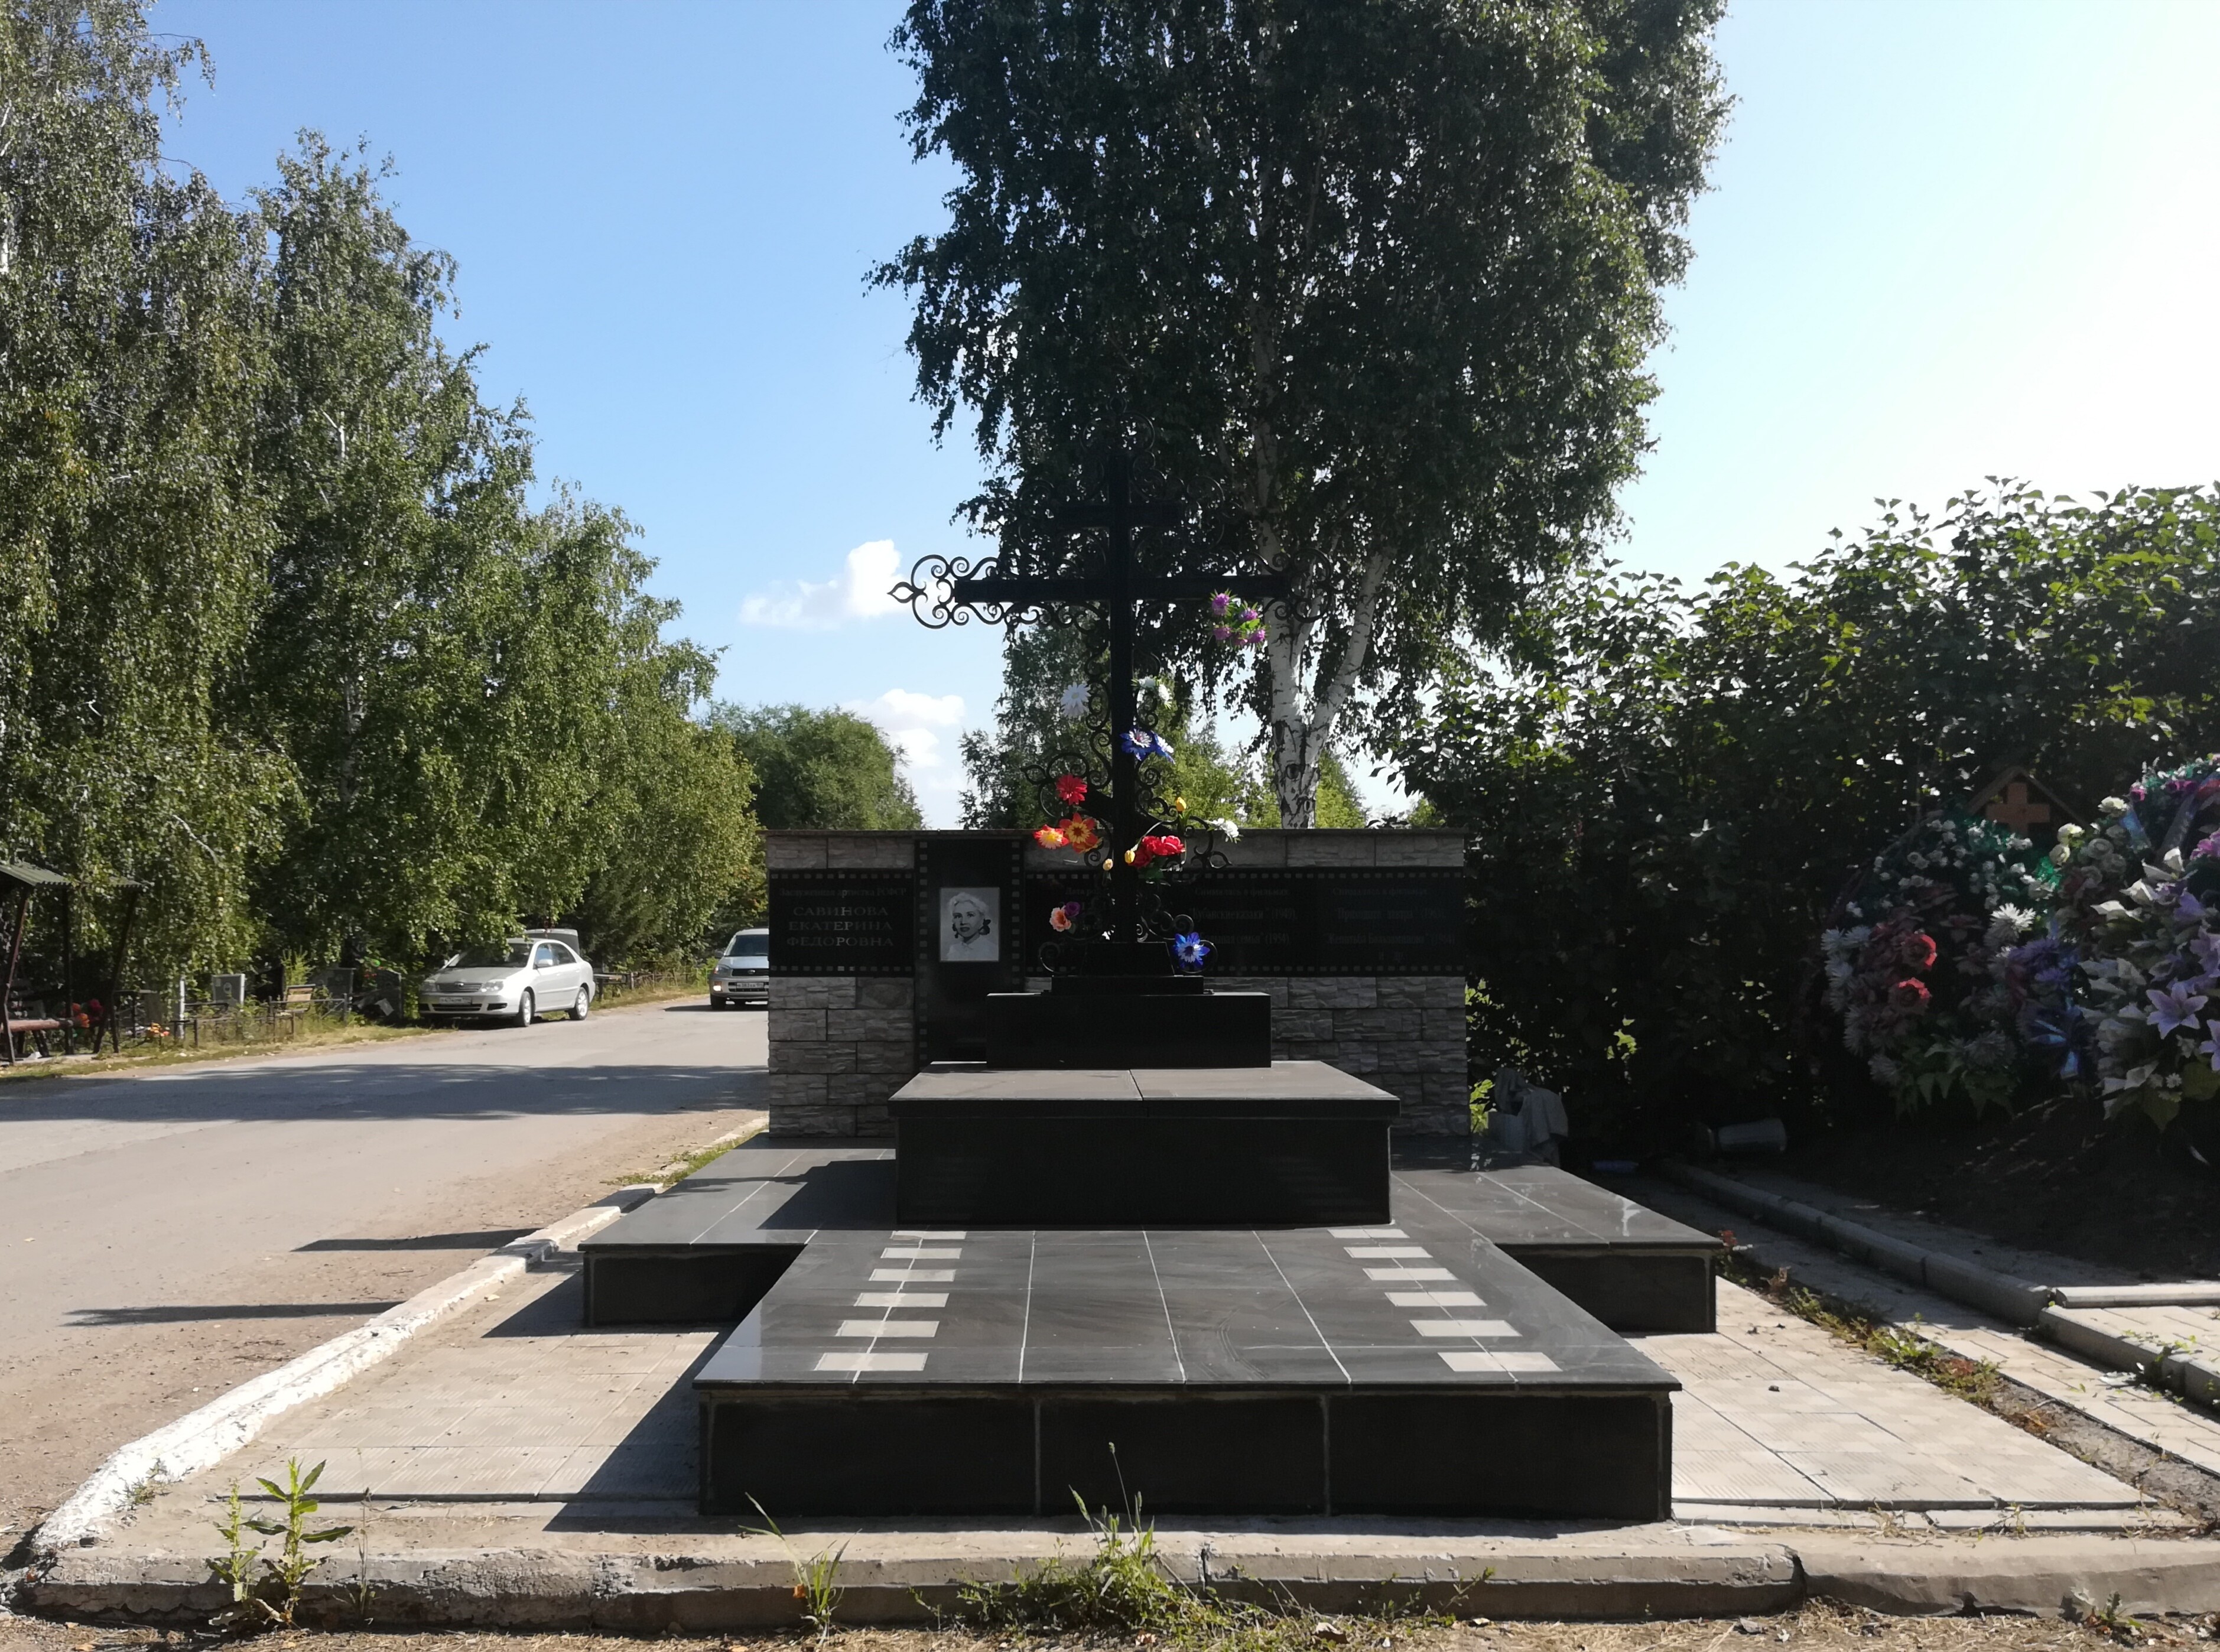 https://e.radikal.host/2023/04/18/Ekaterina_Savinova_Kleshchikhinskoye_Cemetery.jpg